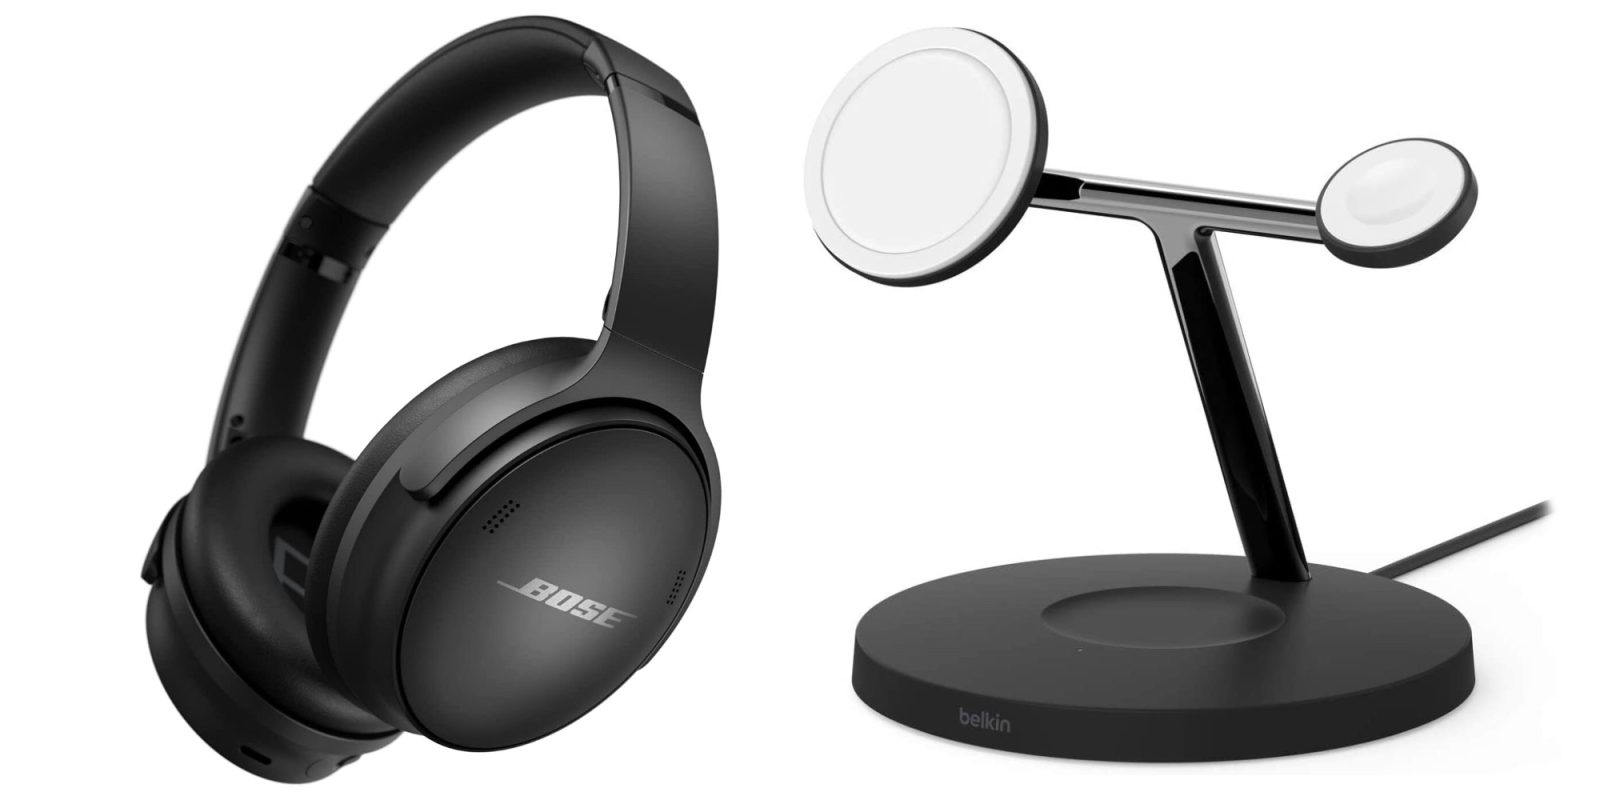 Bose QuietComfort 45 are a bargain pair of ANC headphones with